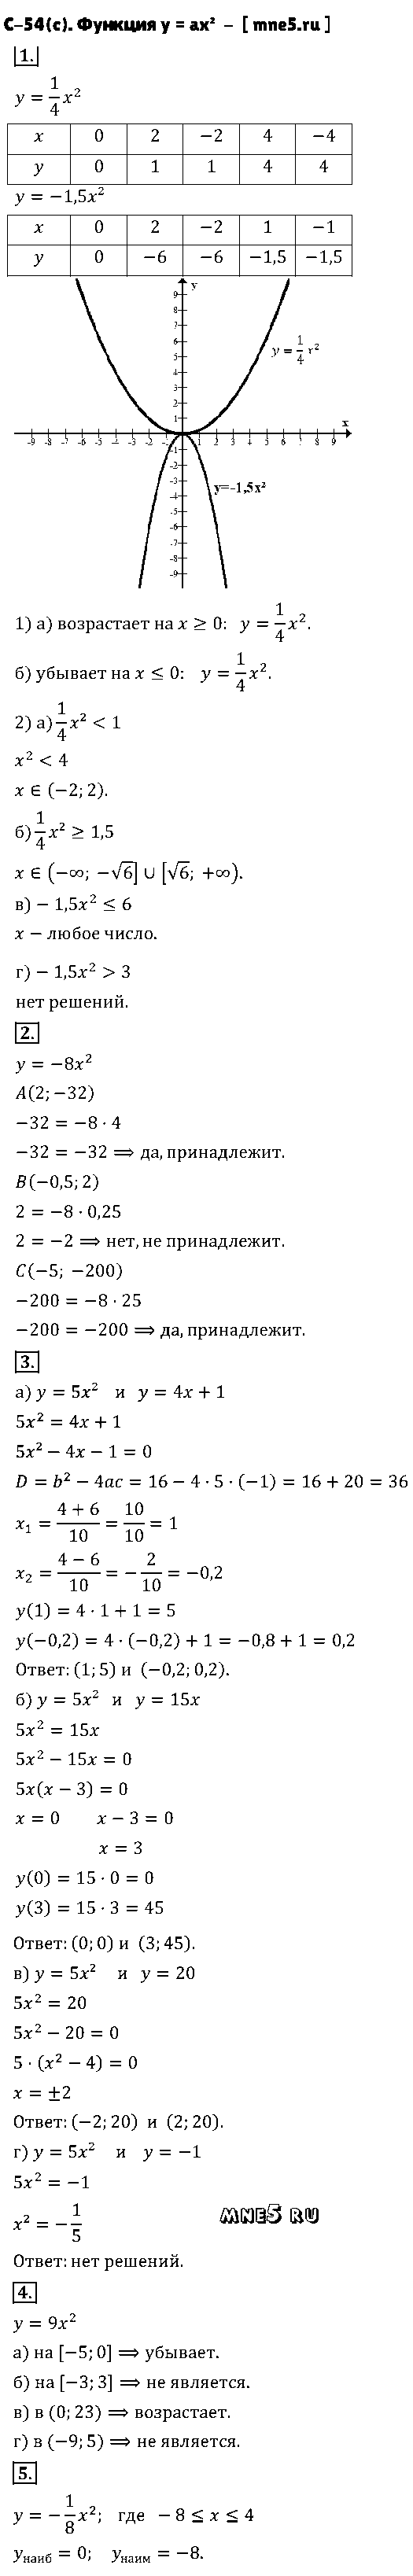 ГДЗ Алгебра 8 класс - С-54(с). Функция y = ax²